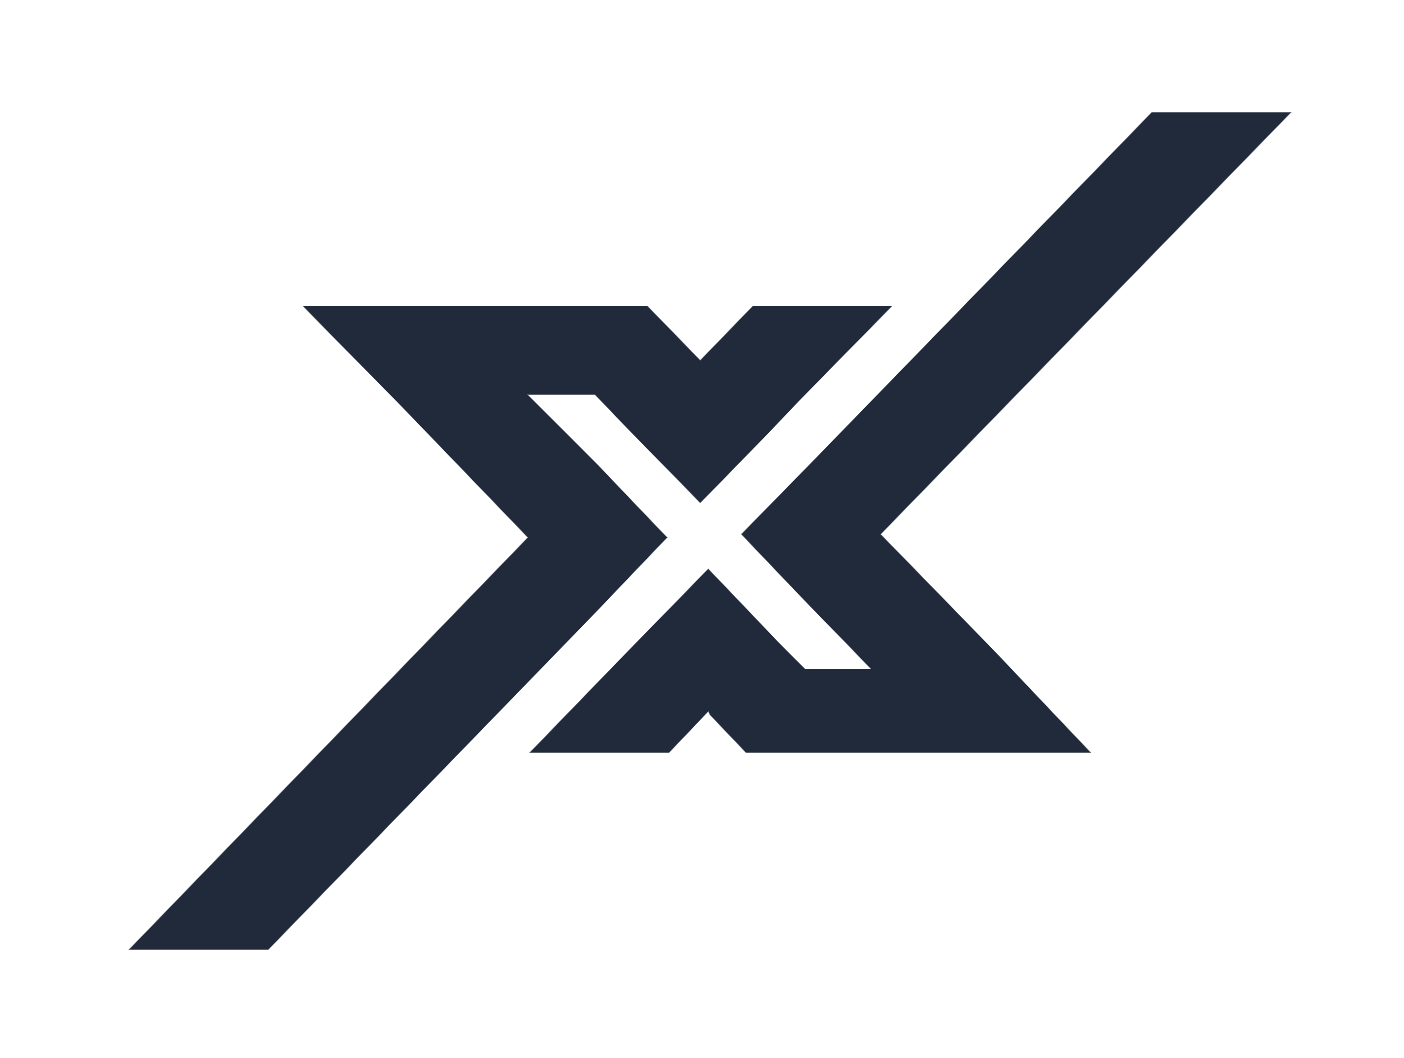 LogoX